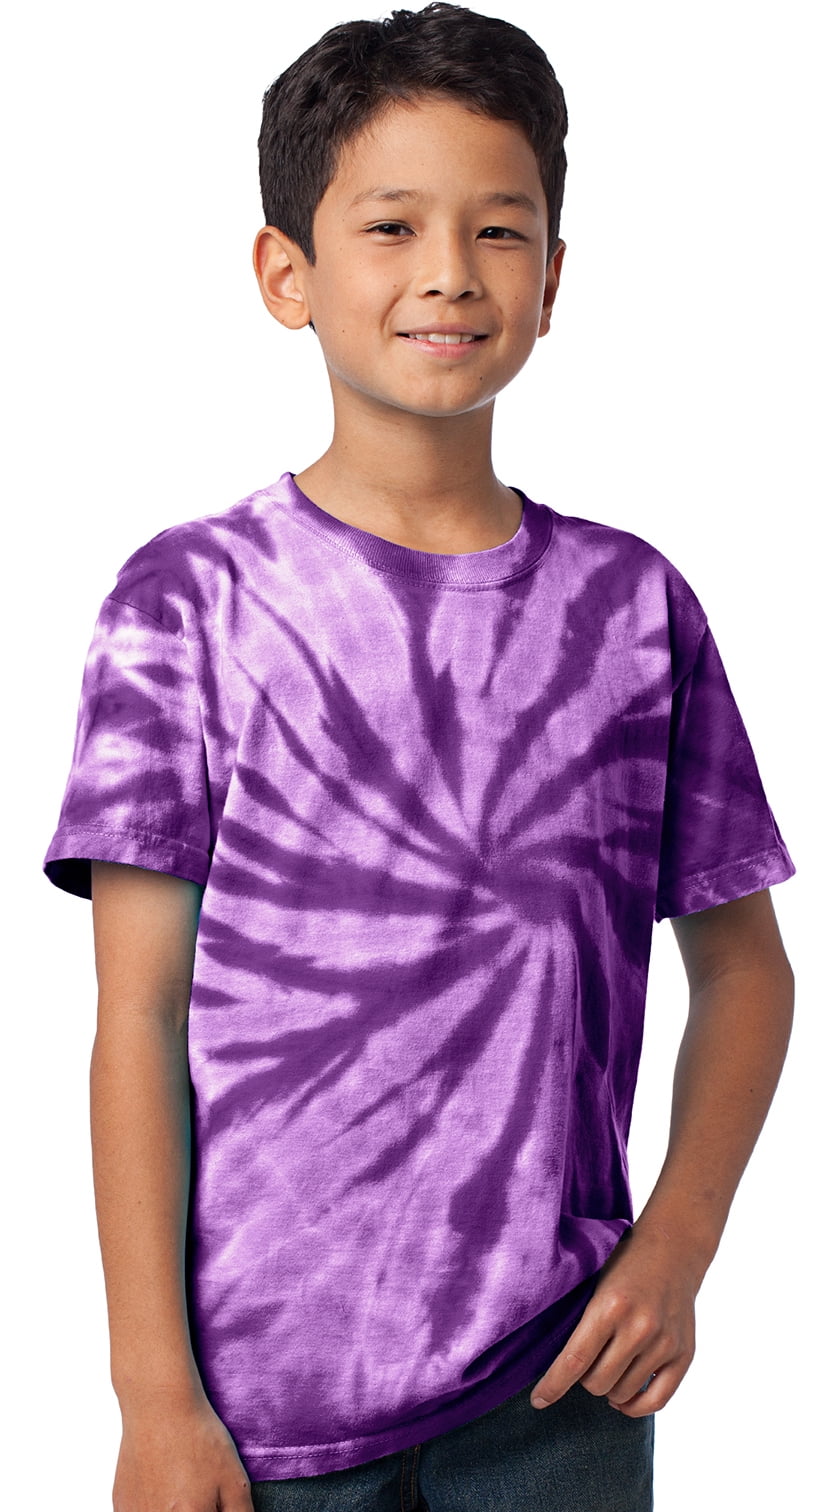 Kids Tie Dye T-shirt - Purple, Extra ...